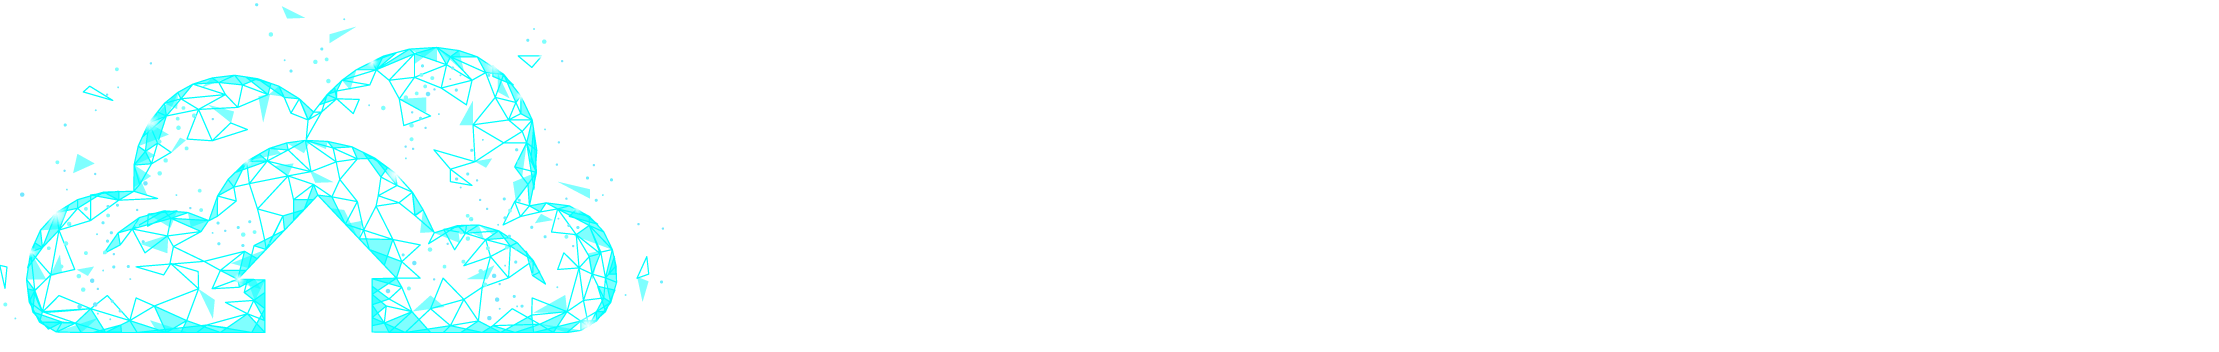 ArcusCloud - Logo